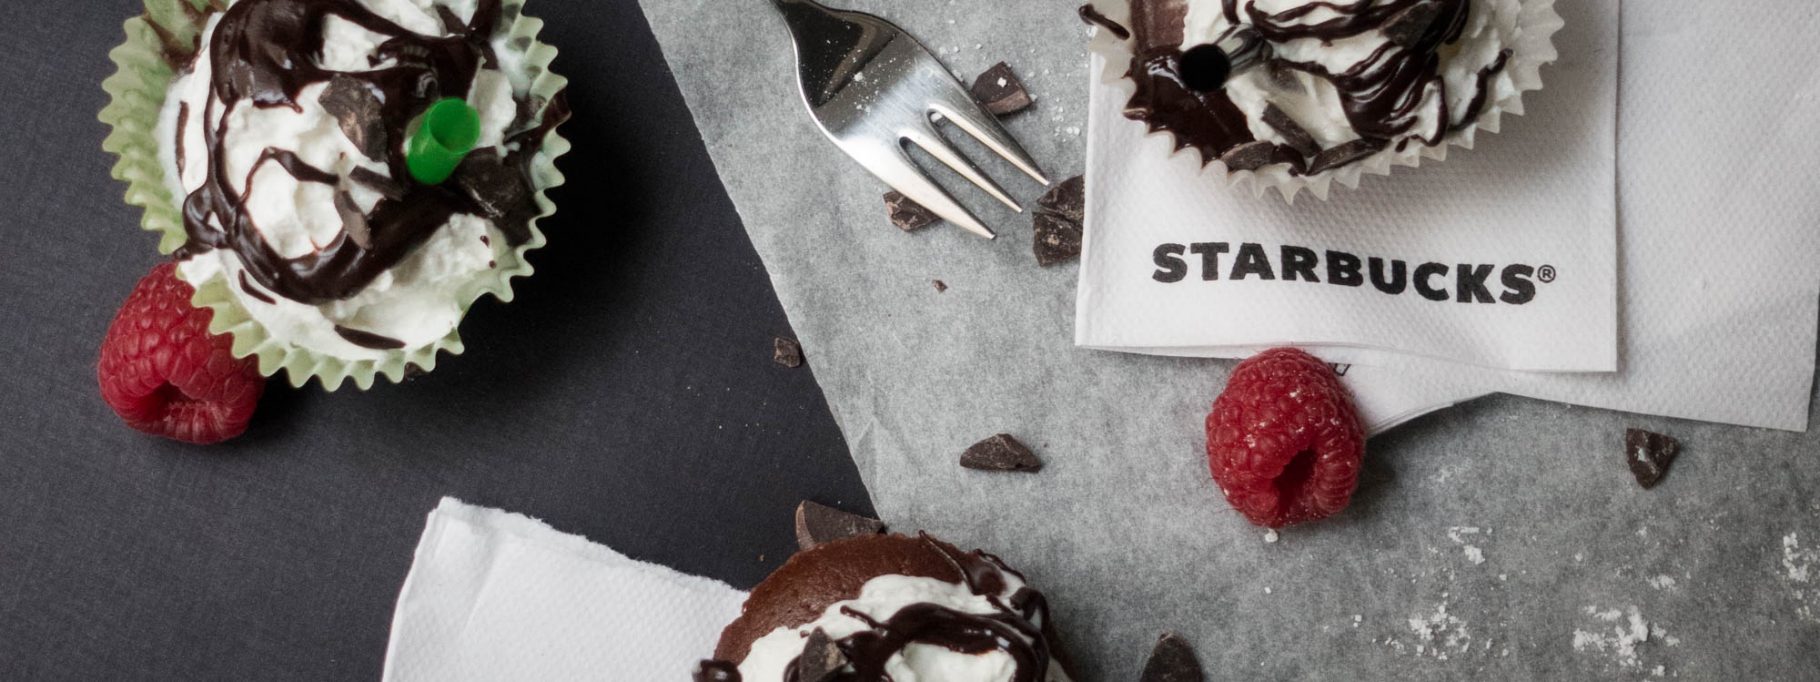 Frappuccino Inspired Vegan Cupcakes <br> Happy Birthday Starbucks!